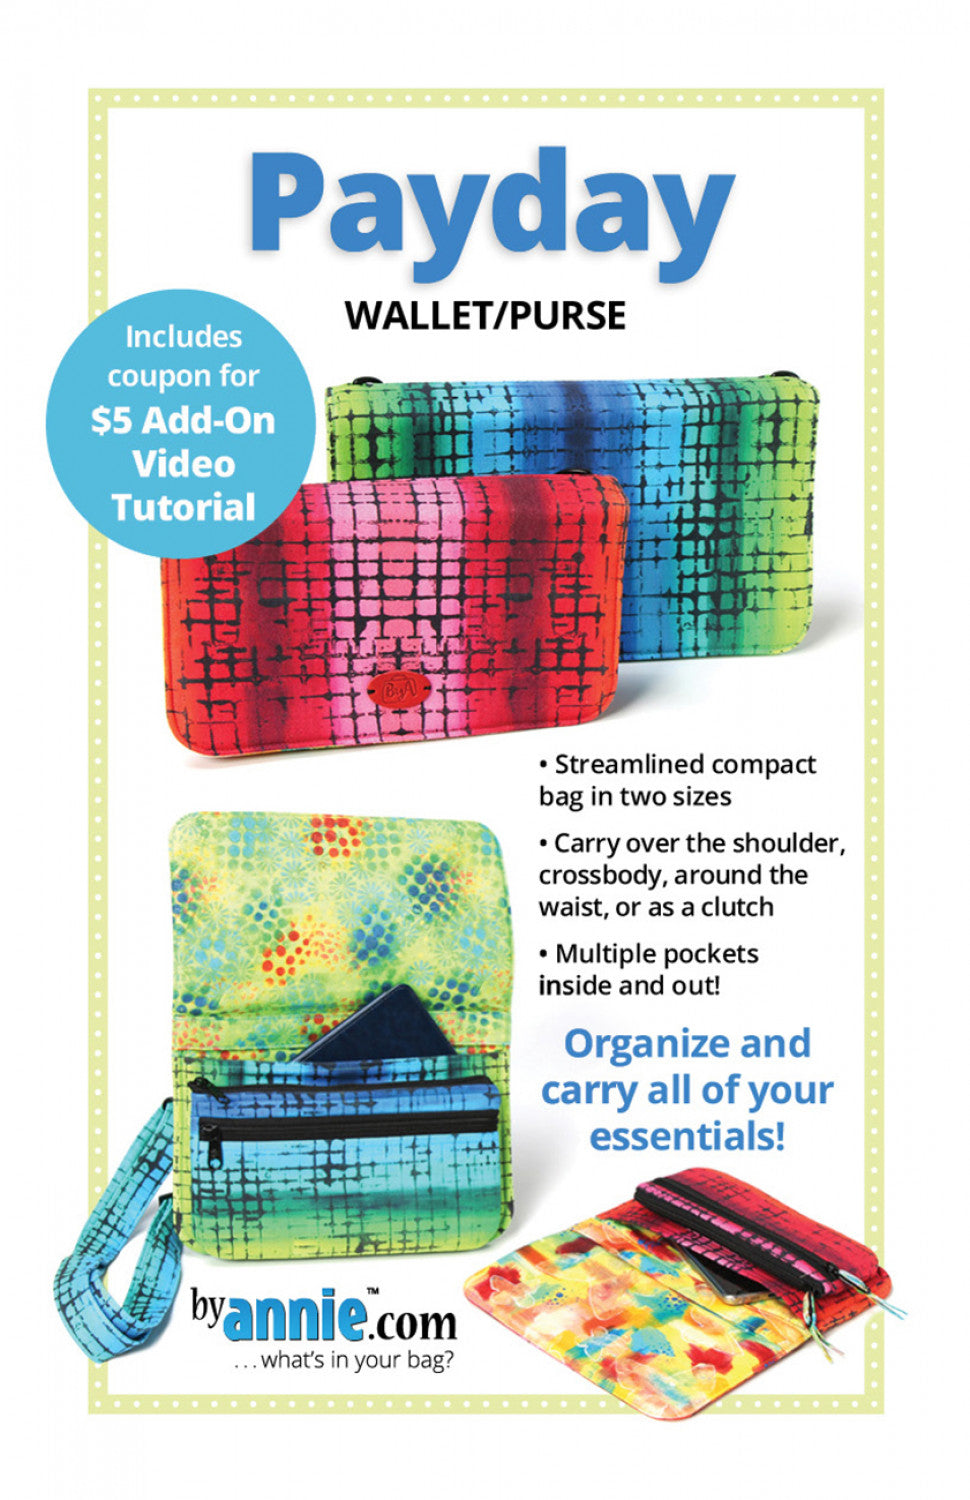 Payday Wallet/Purse Sewing Pattern by Annie Unrein for ByAnnie